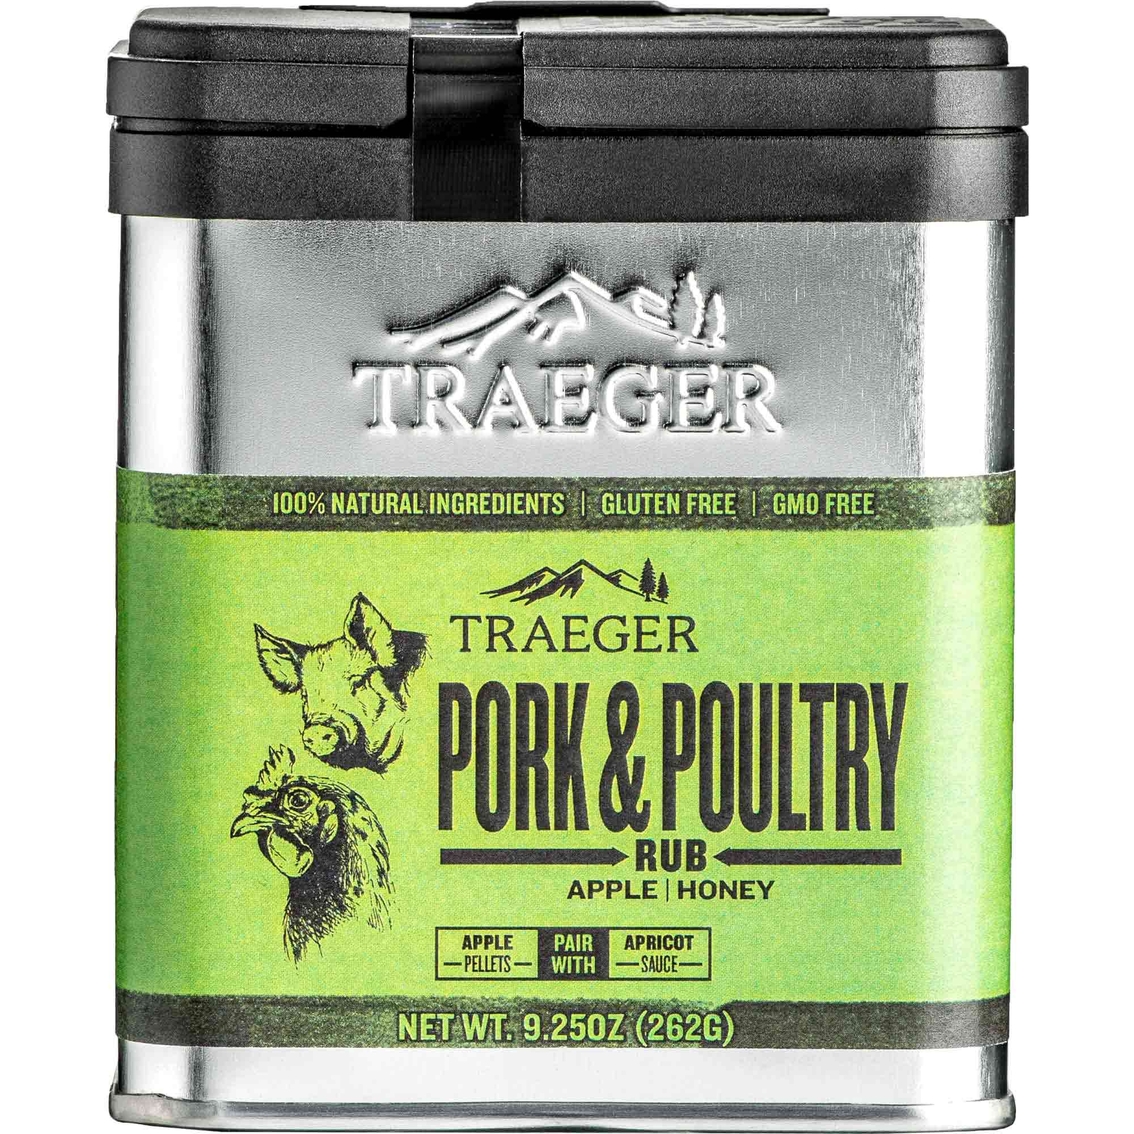 Traeger Pork & Poultry Rub 9.25 oz. - Image 1 of 3